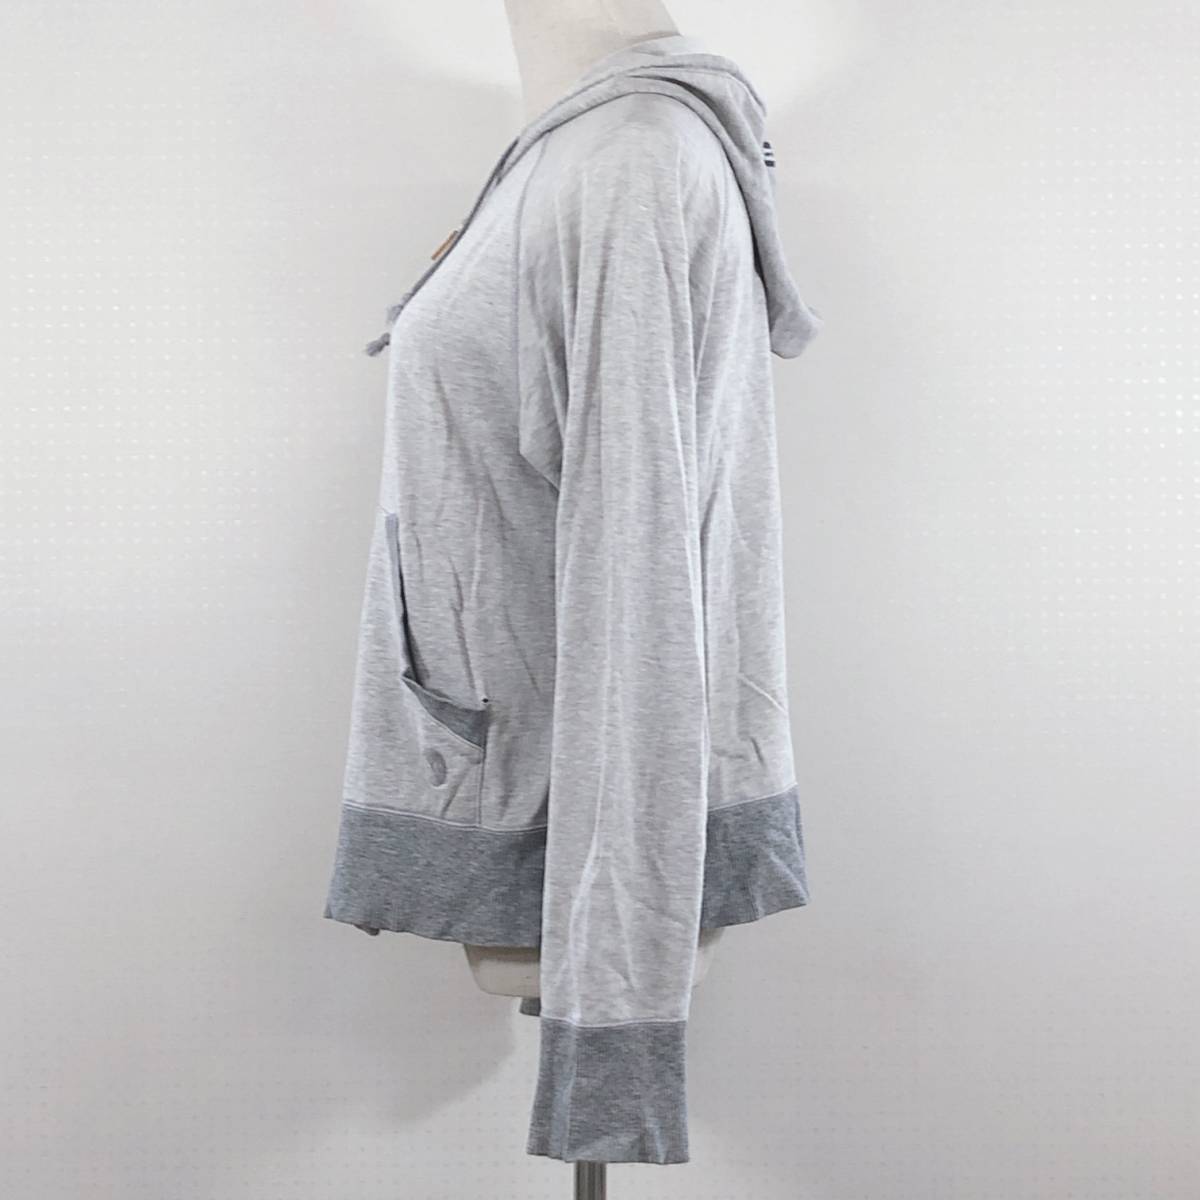 AS1134 HUITIEME 8ewitem lady's tops Zip Parker long sleeve M gray ash cotton 100% cotton active wear sport ko-te